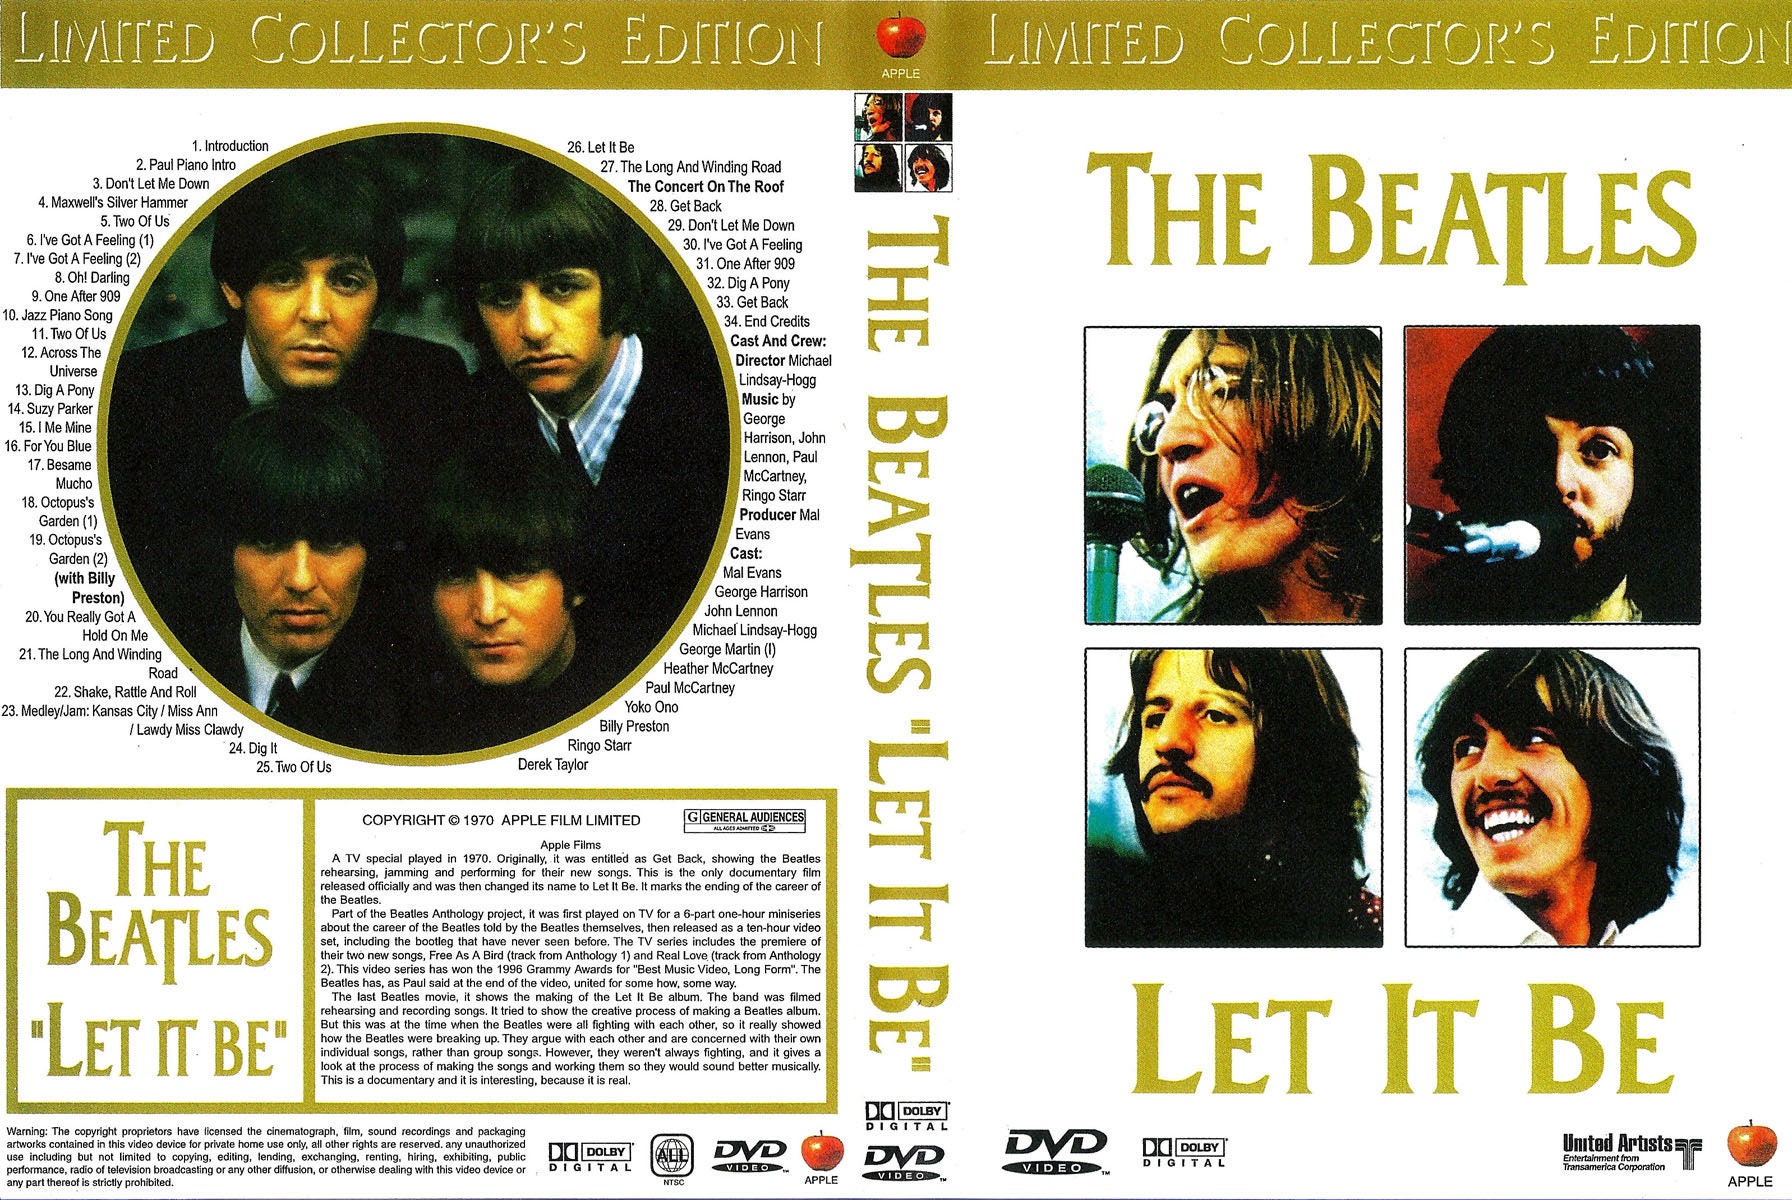 Желтая в песне битлз. The Beatles Let it be 1970 обложка. The Beatles обложка для диска. Beatles "the Let it be" Автор. Beatles "the Let it be" Автор слов.